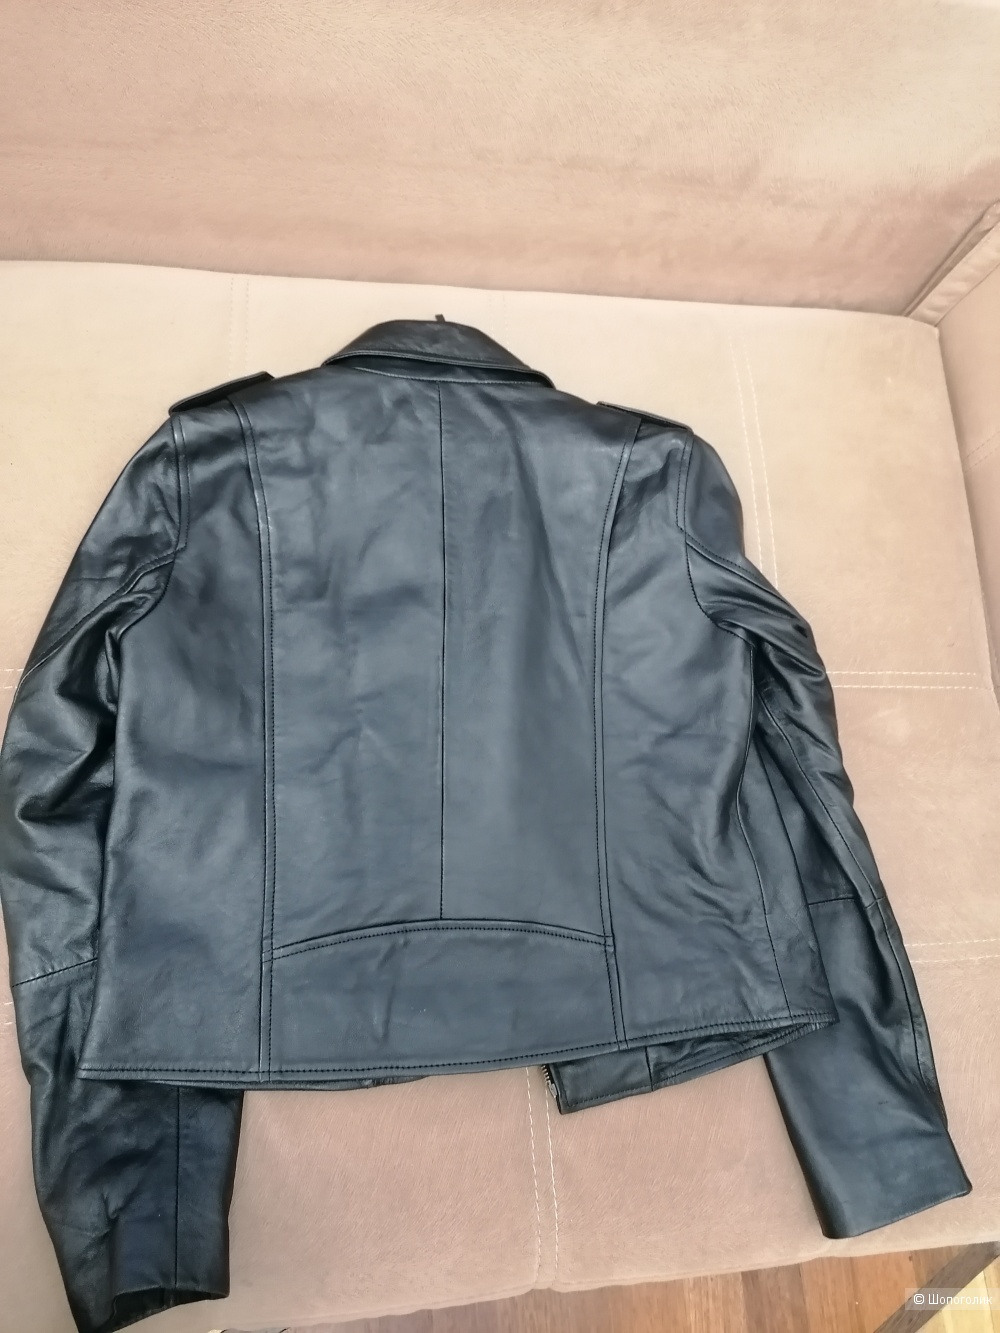 Кожаная куртка Pakkar размер 46-48